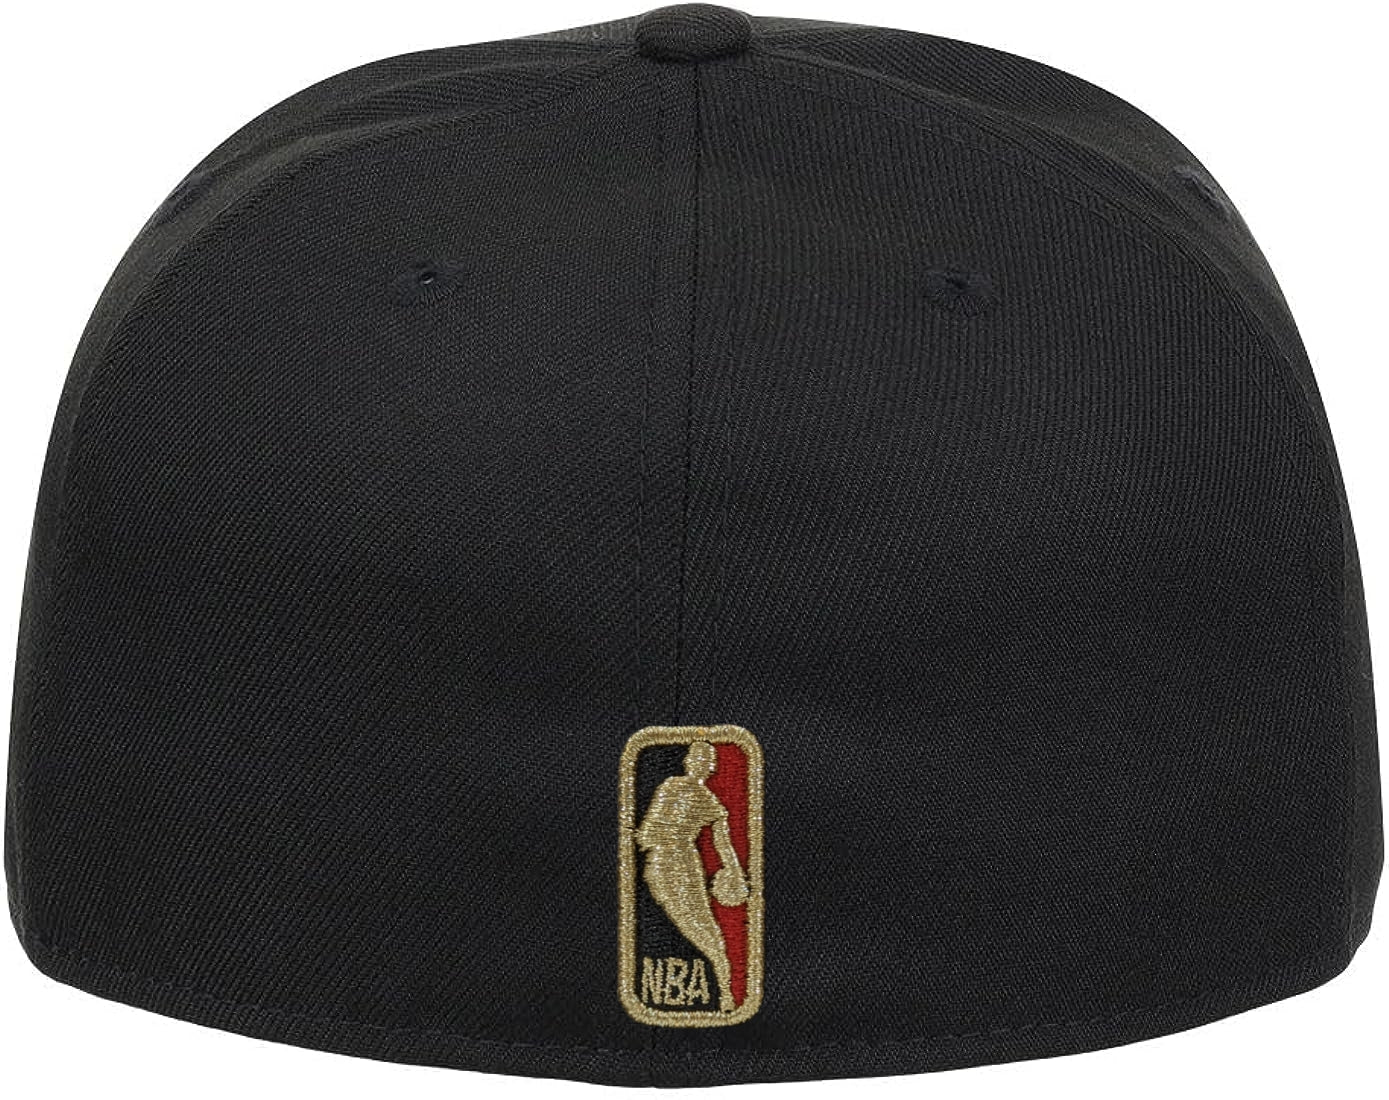 Men's Chicago Bulls New Era Black University Gold 59FIFTY Fitted Hat